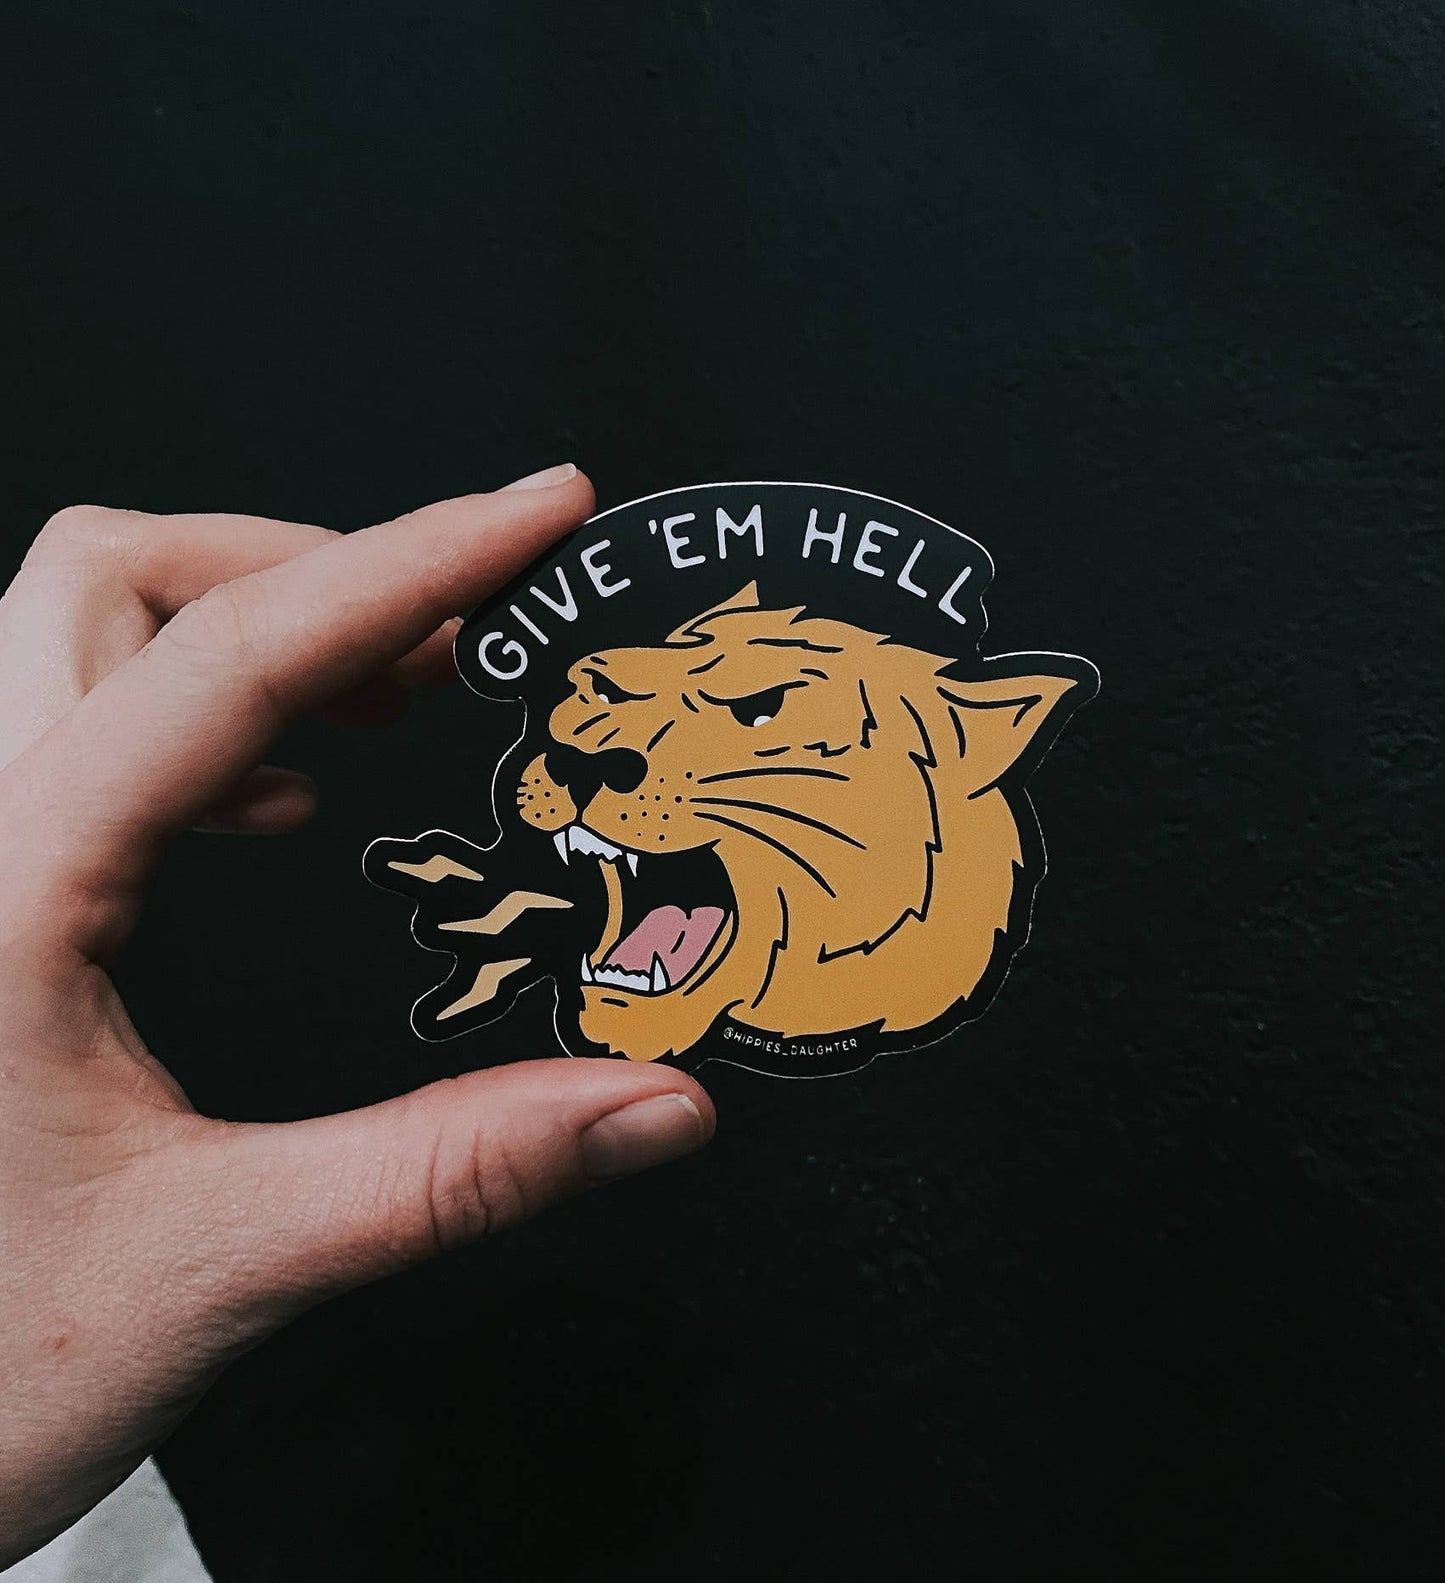 Give ‘em Hell Sticker